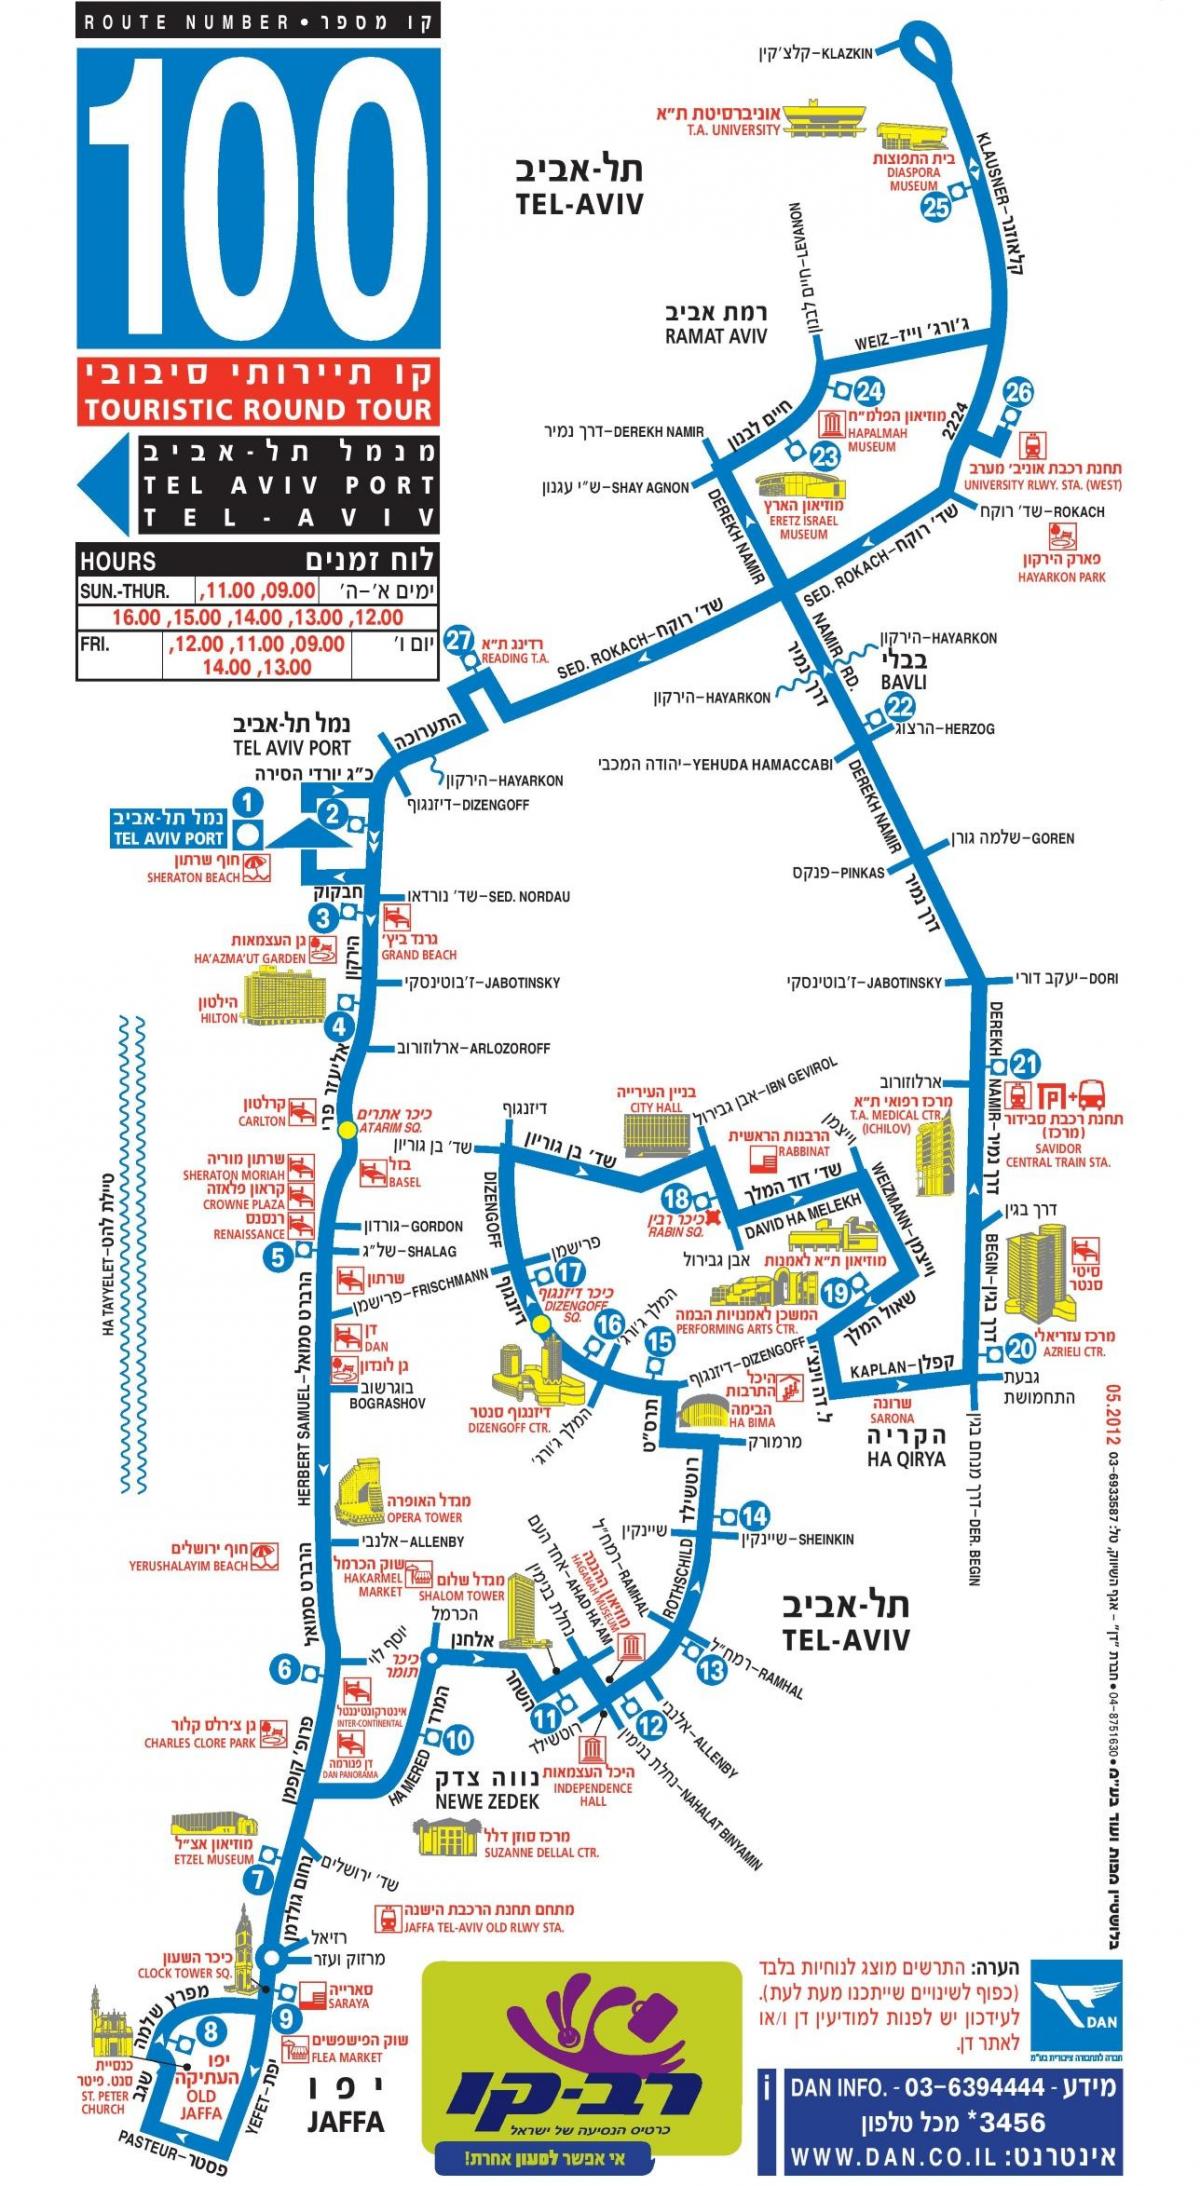 Tel Aviv Hop On Hop Off Bus tours mapa